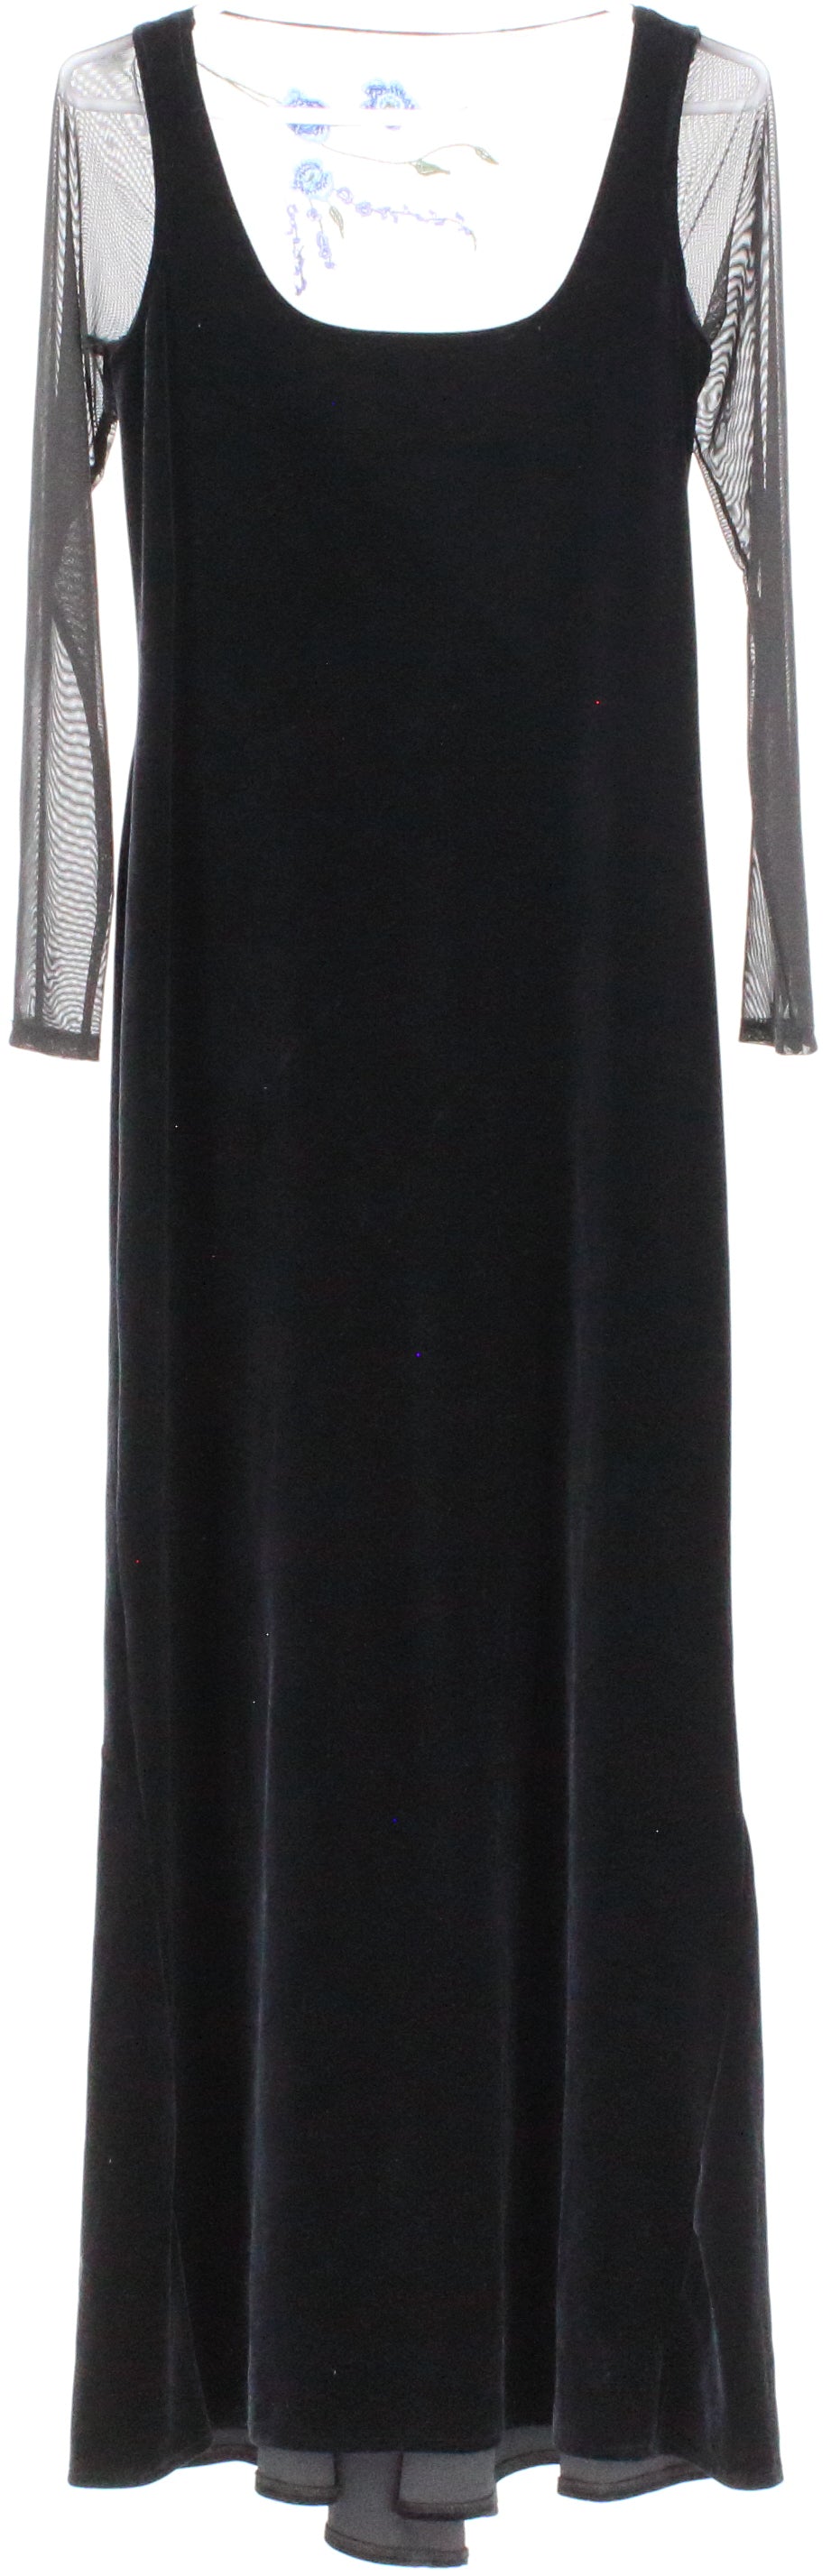 Black Long Velvet Dress With Embroidered Tulle